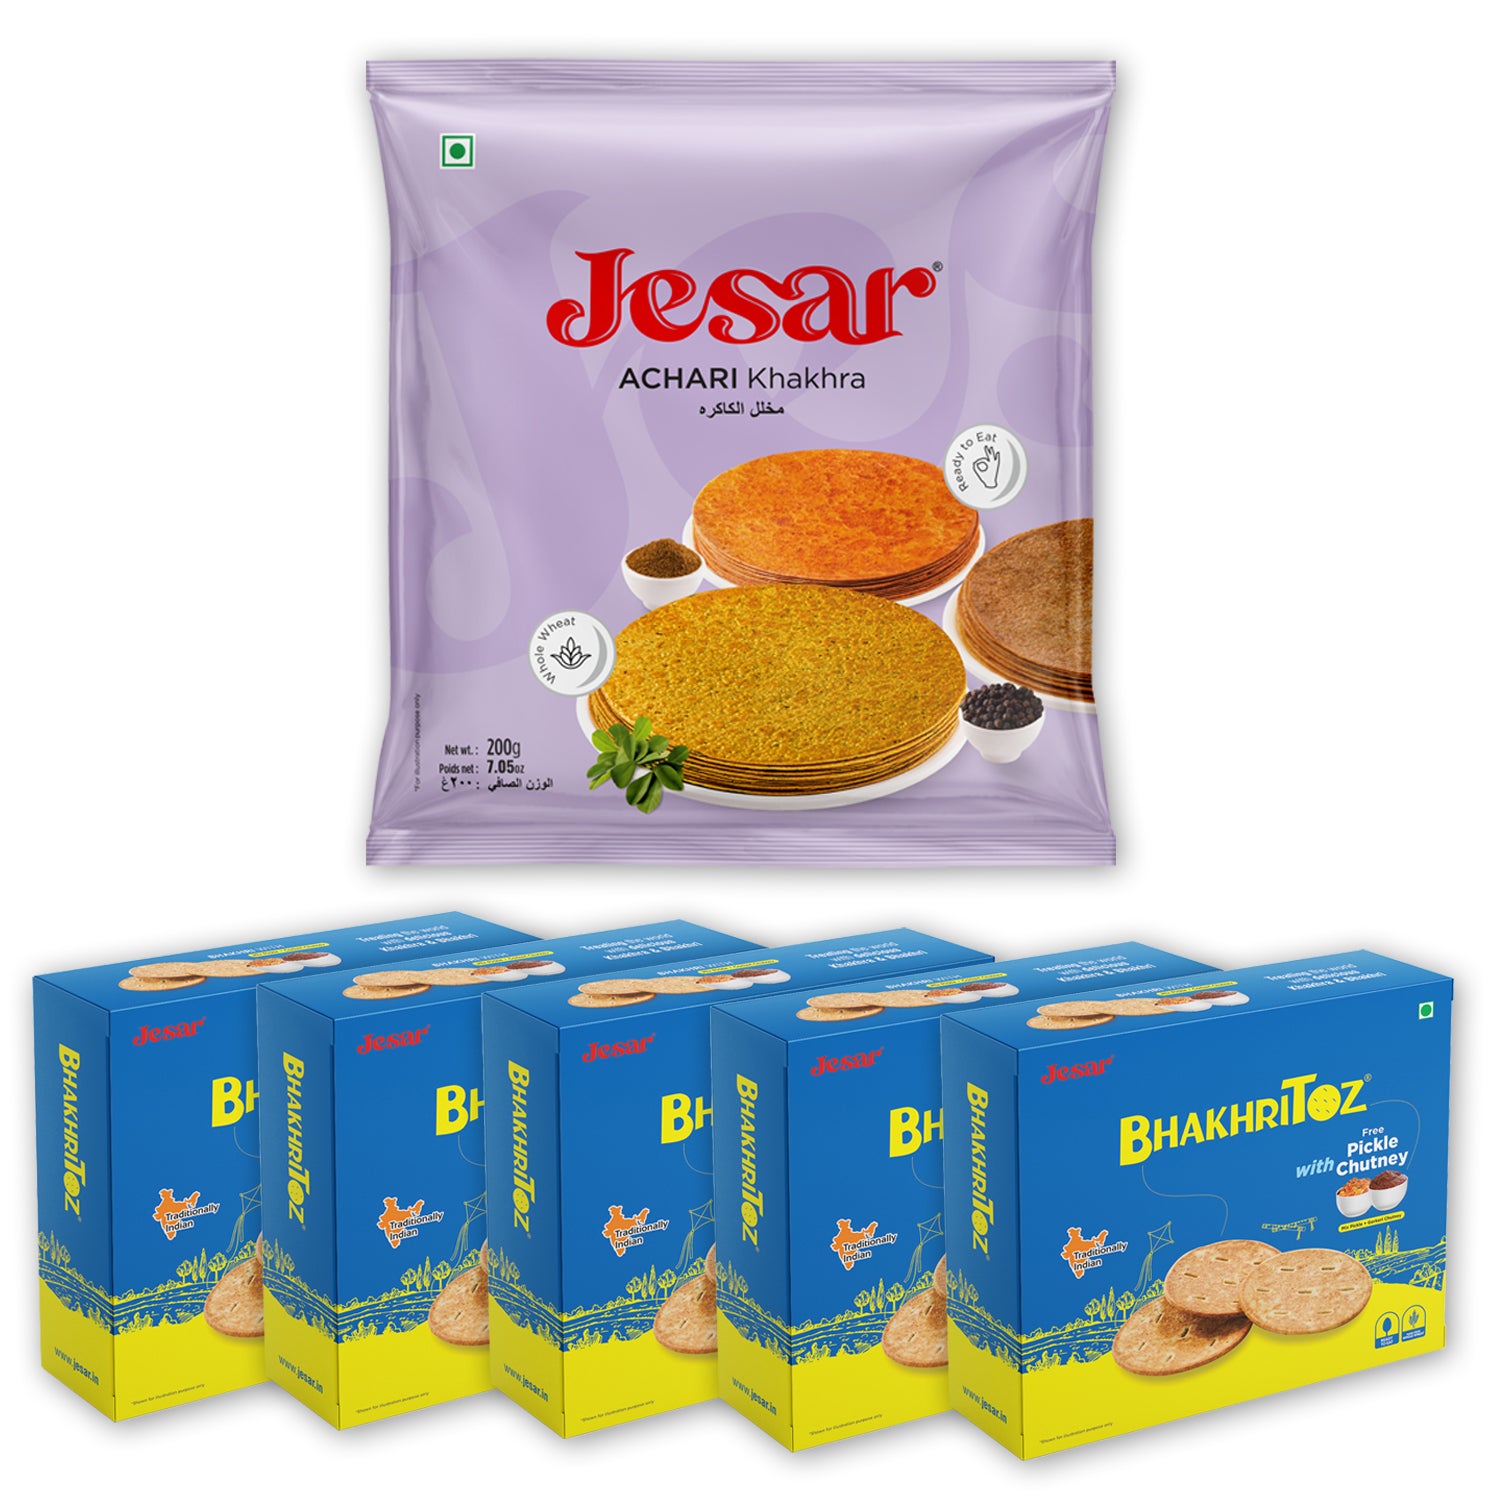 Jesar Namkeen Snacks Combo Achari Khakhra 200g -1 Pkt And BhakhriToz With Mix Pickle and Gorkeri chutney 55g - 5 Pkt